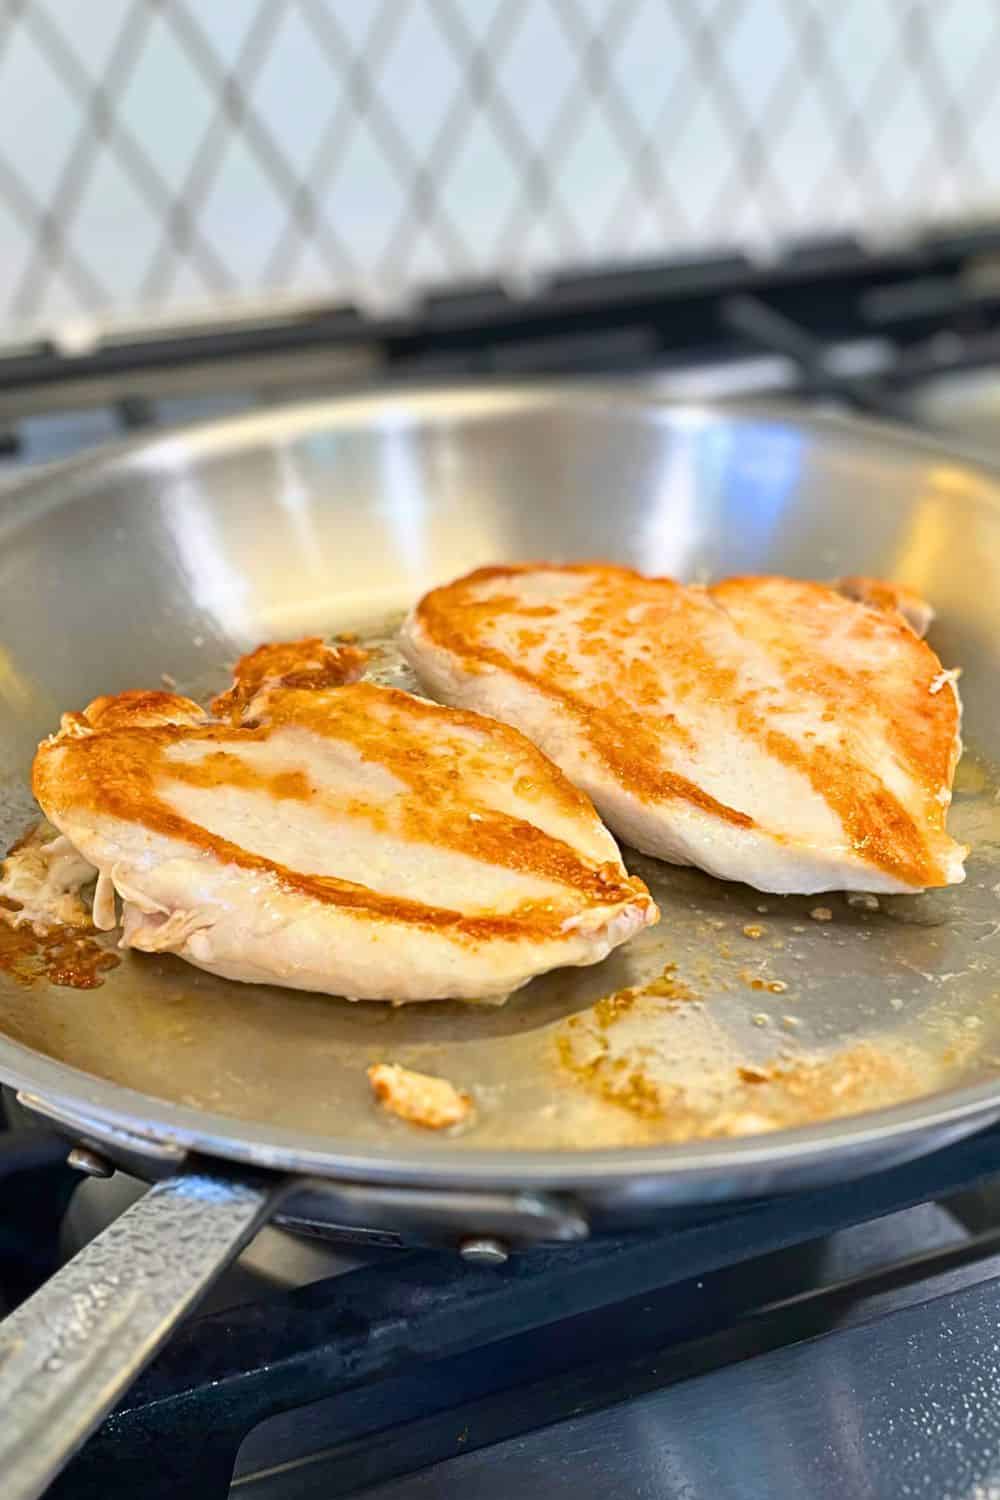 How to cook Juicy Chicken Breasts